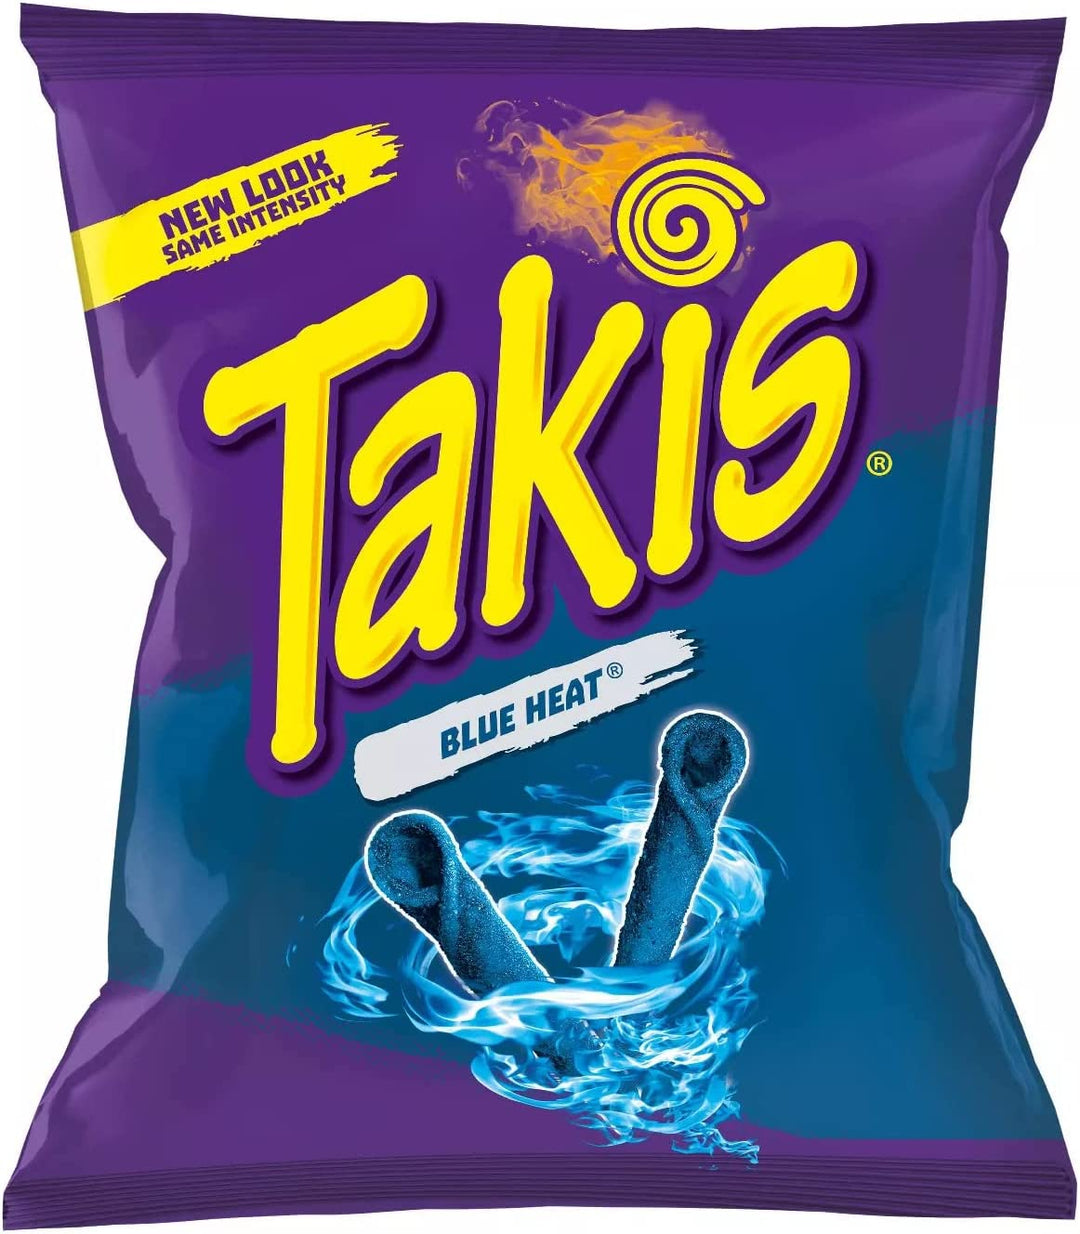 Takis Blue Heat Tortilla Chips